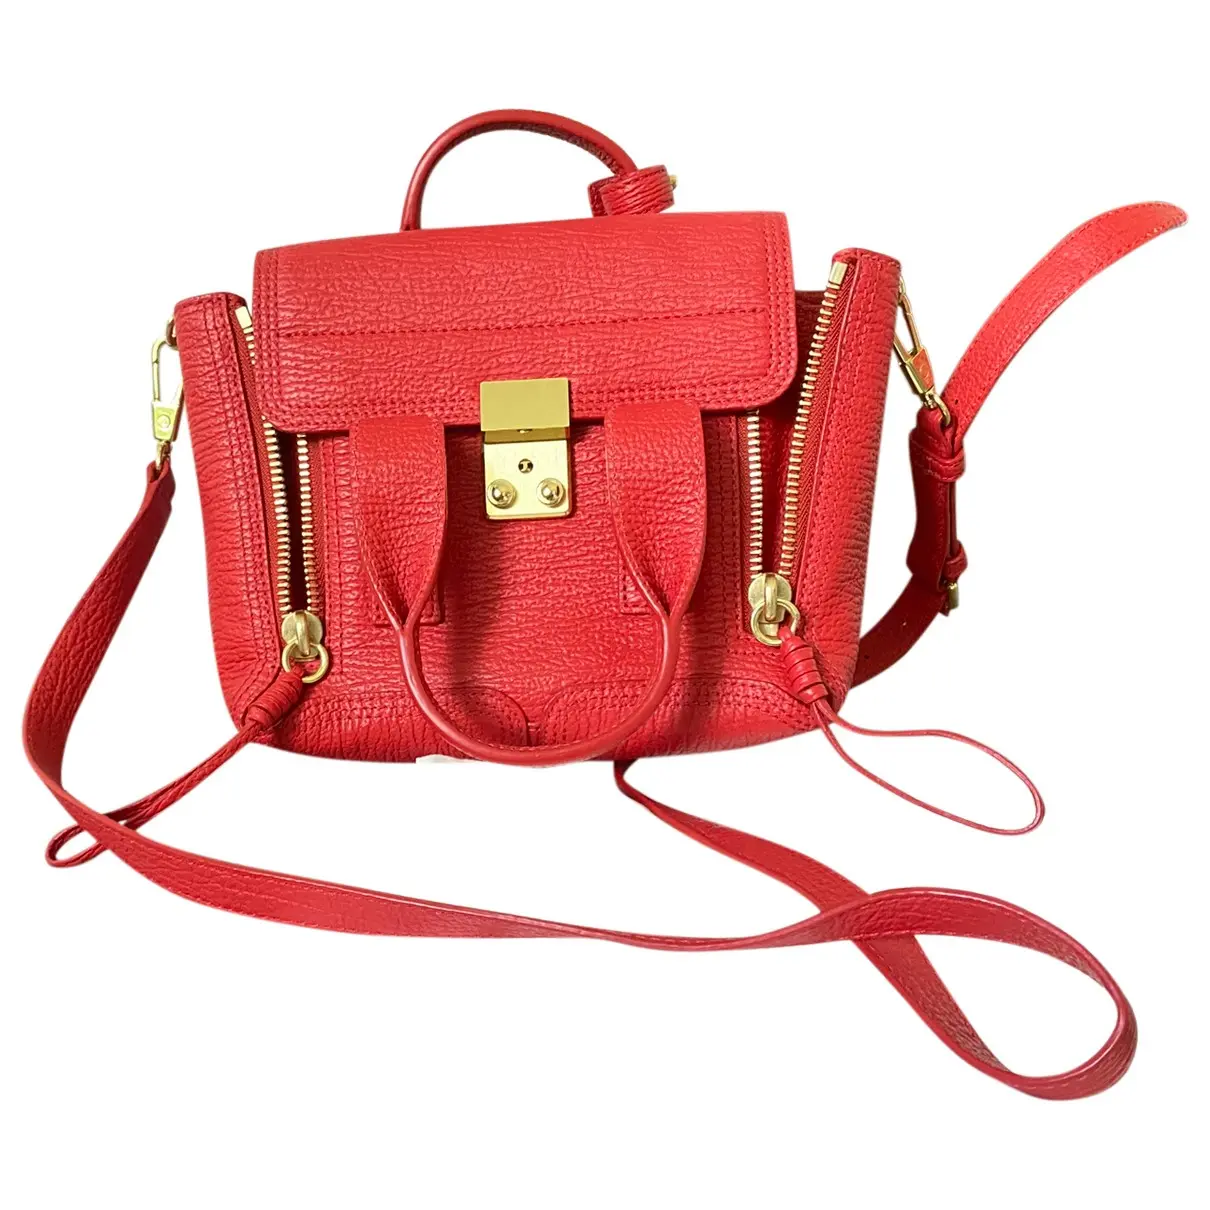 Pashli leather handbag 3.1 Phillip Lim